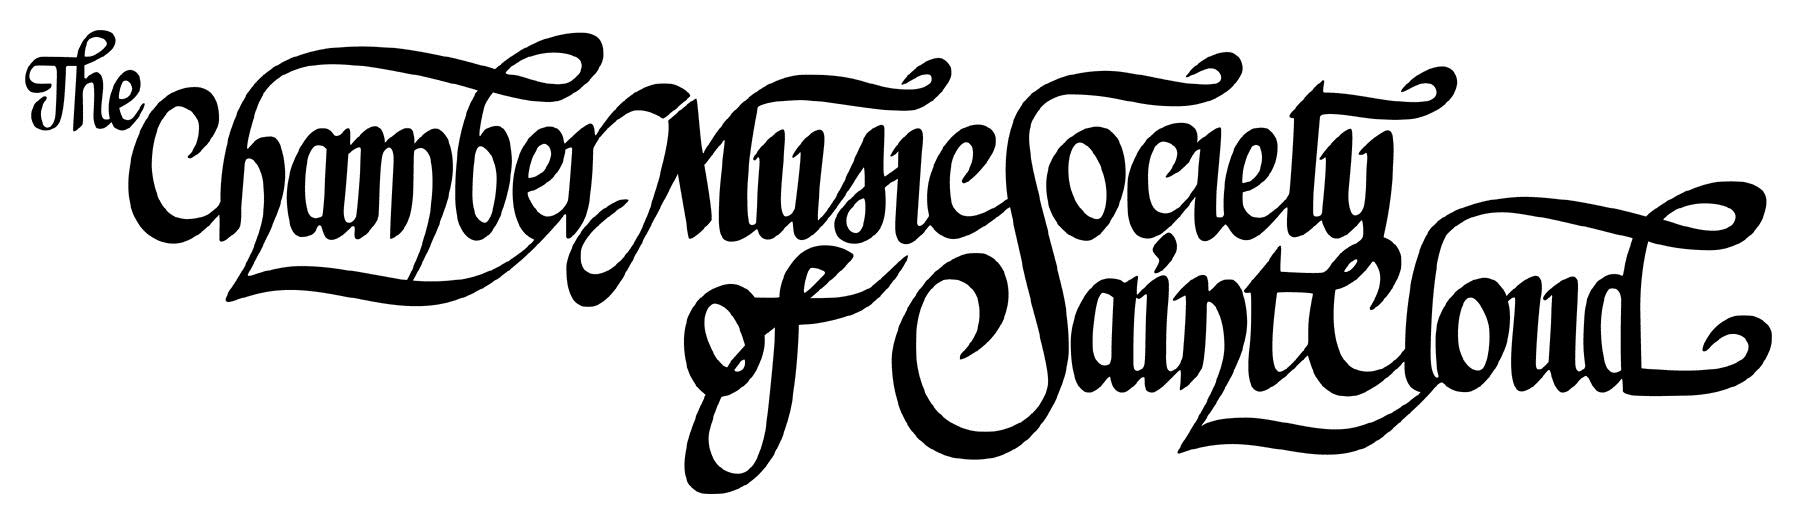 Chamber Music Society of St. Cloud, Inc. logo